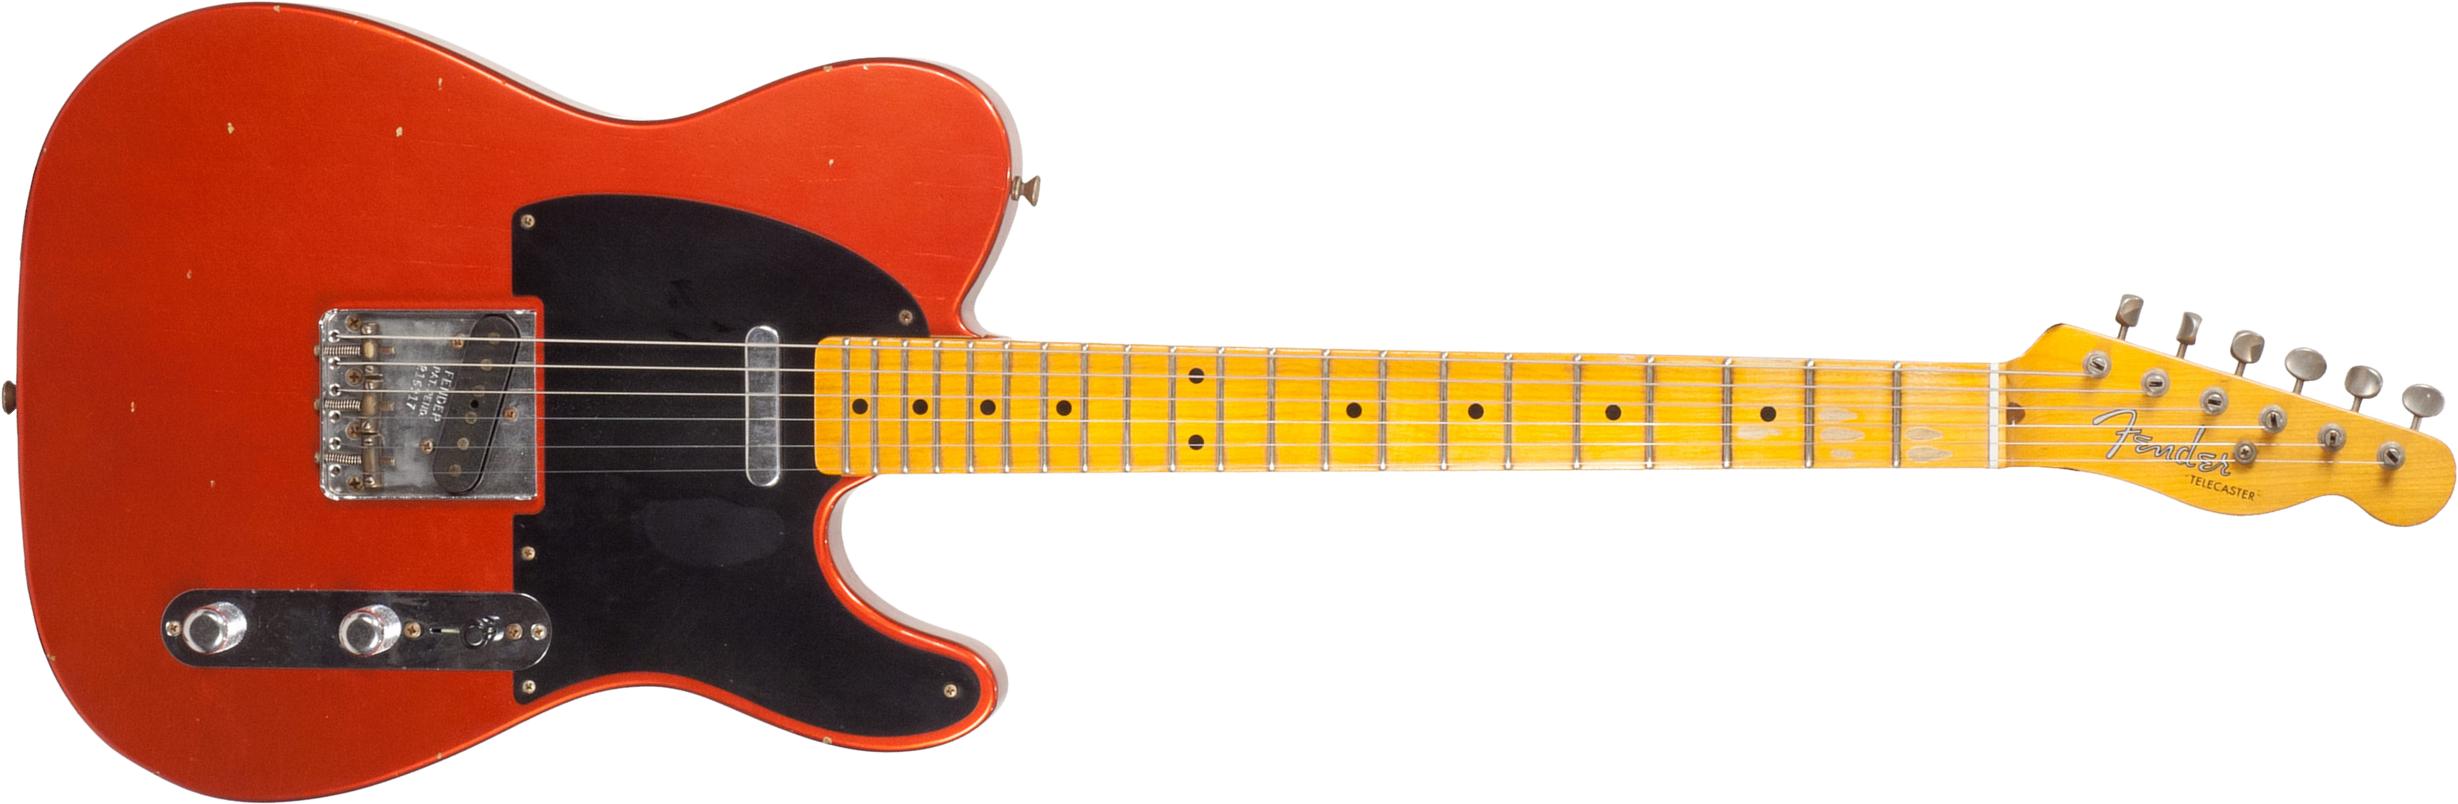 Fender Custom Shop Tele 1952 2s Ht Mn #r16317 - Journeyman Relic Melon Candy - Televorm elektrische gitaar - Main picture